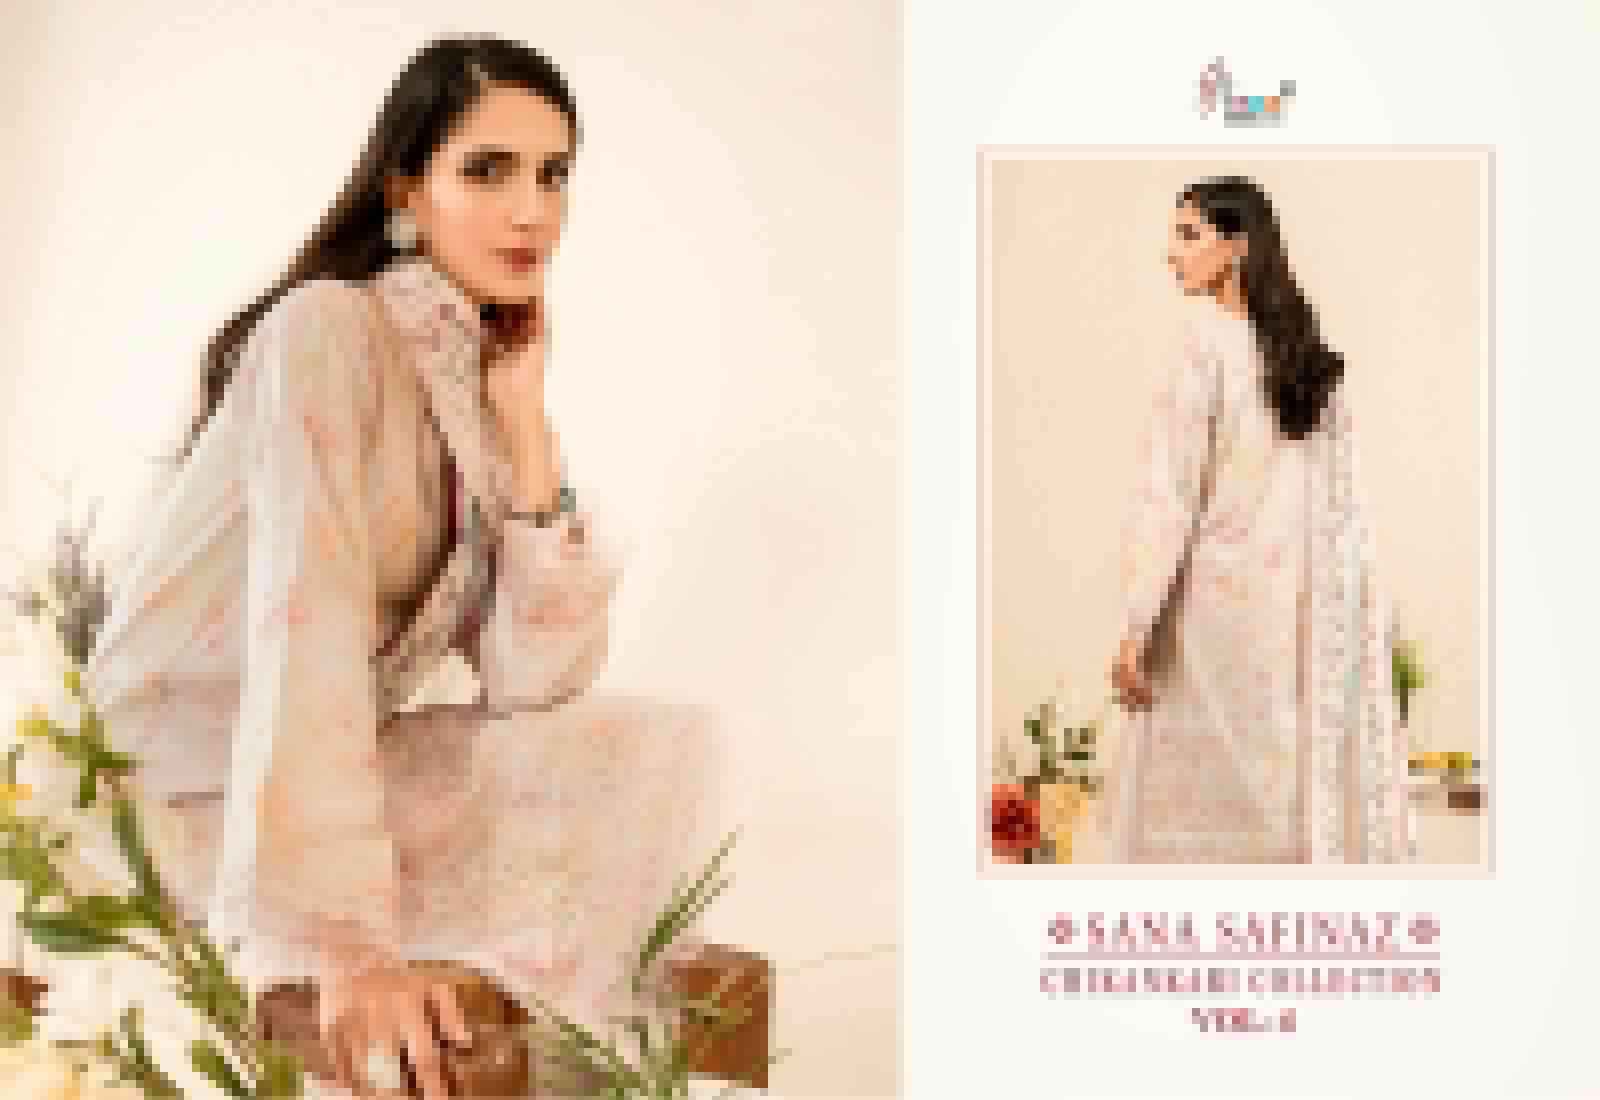 Shree Fabs Sana Safinaz Chikankari Collection Vol-4 Cotton Dress Material (6 pcs Catalogue)